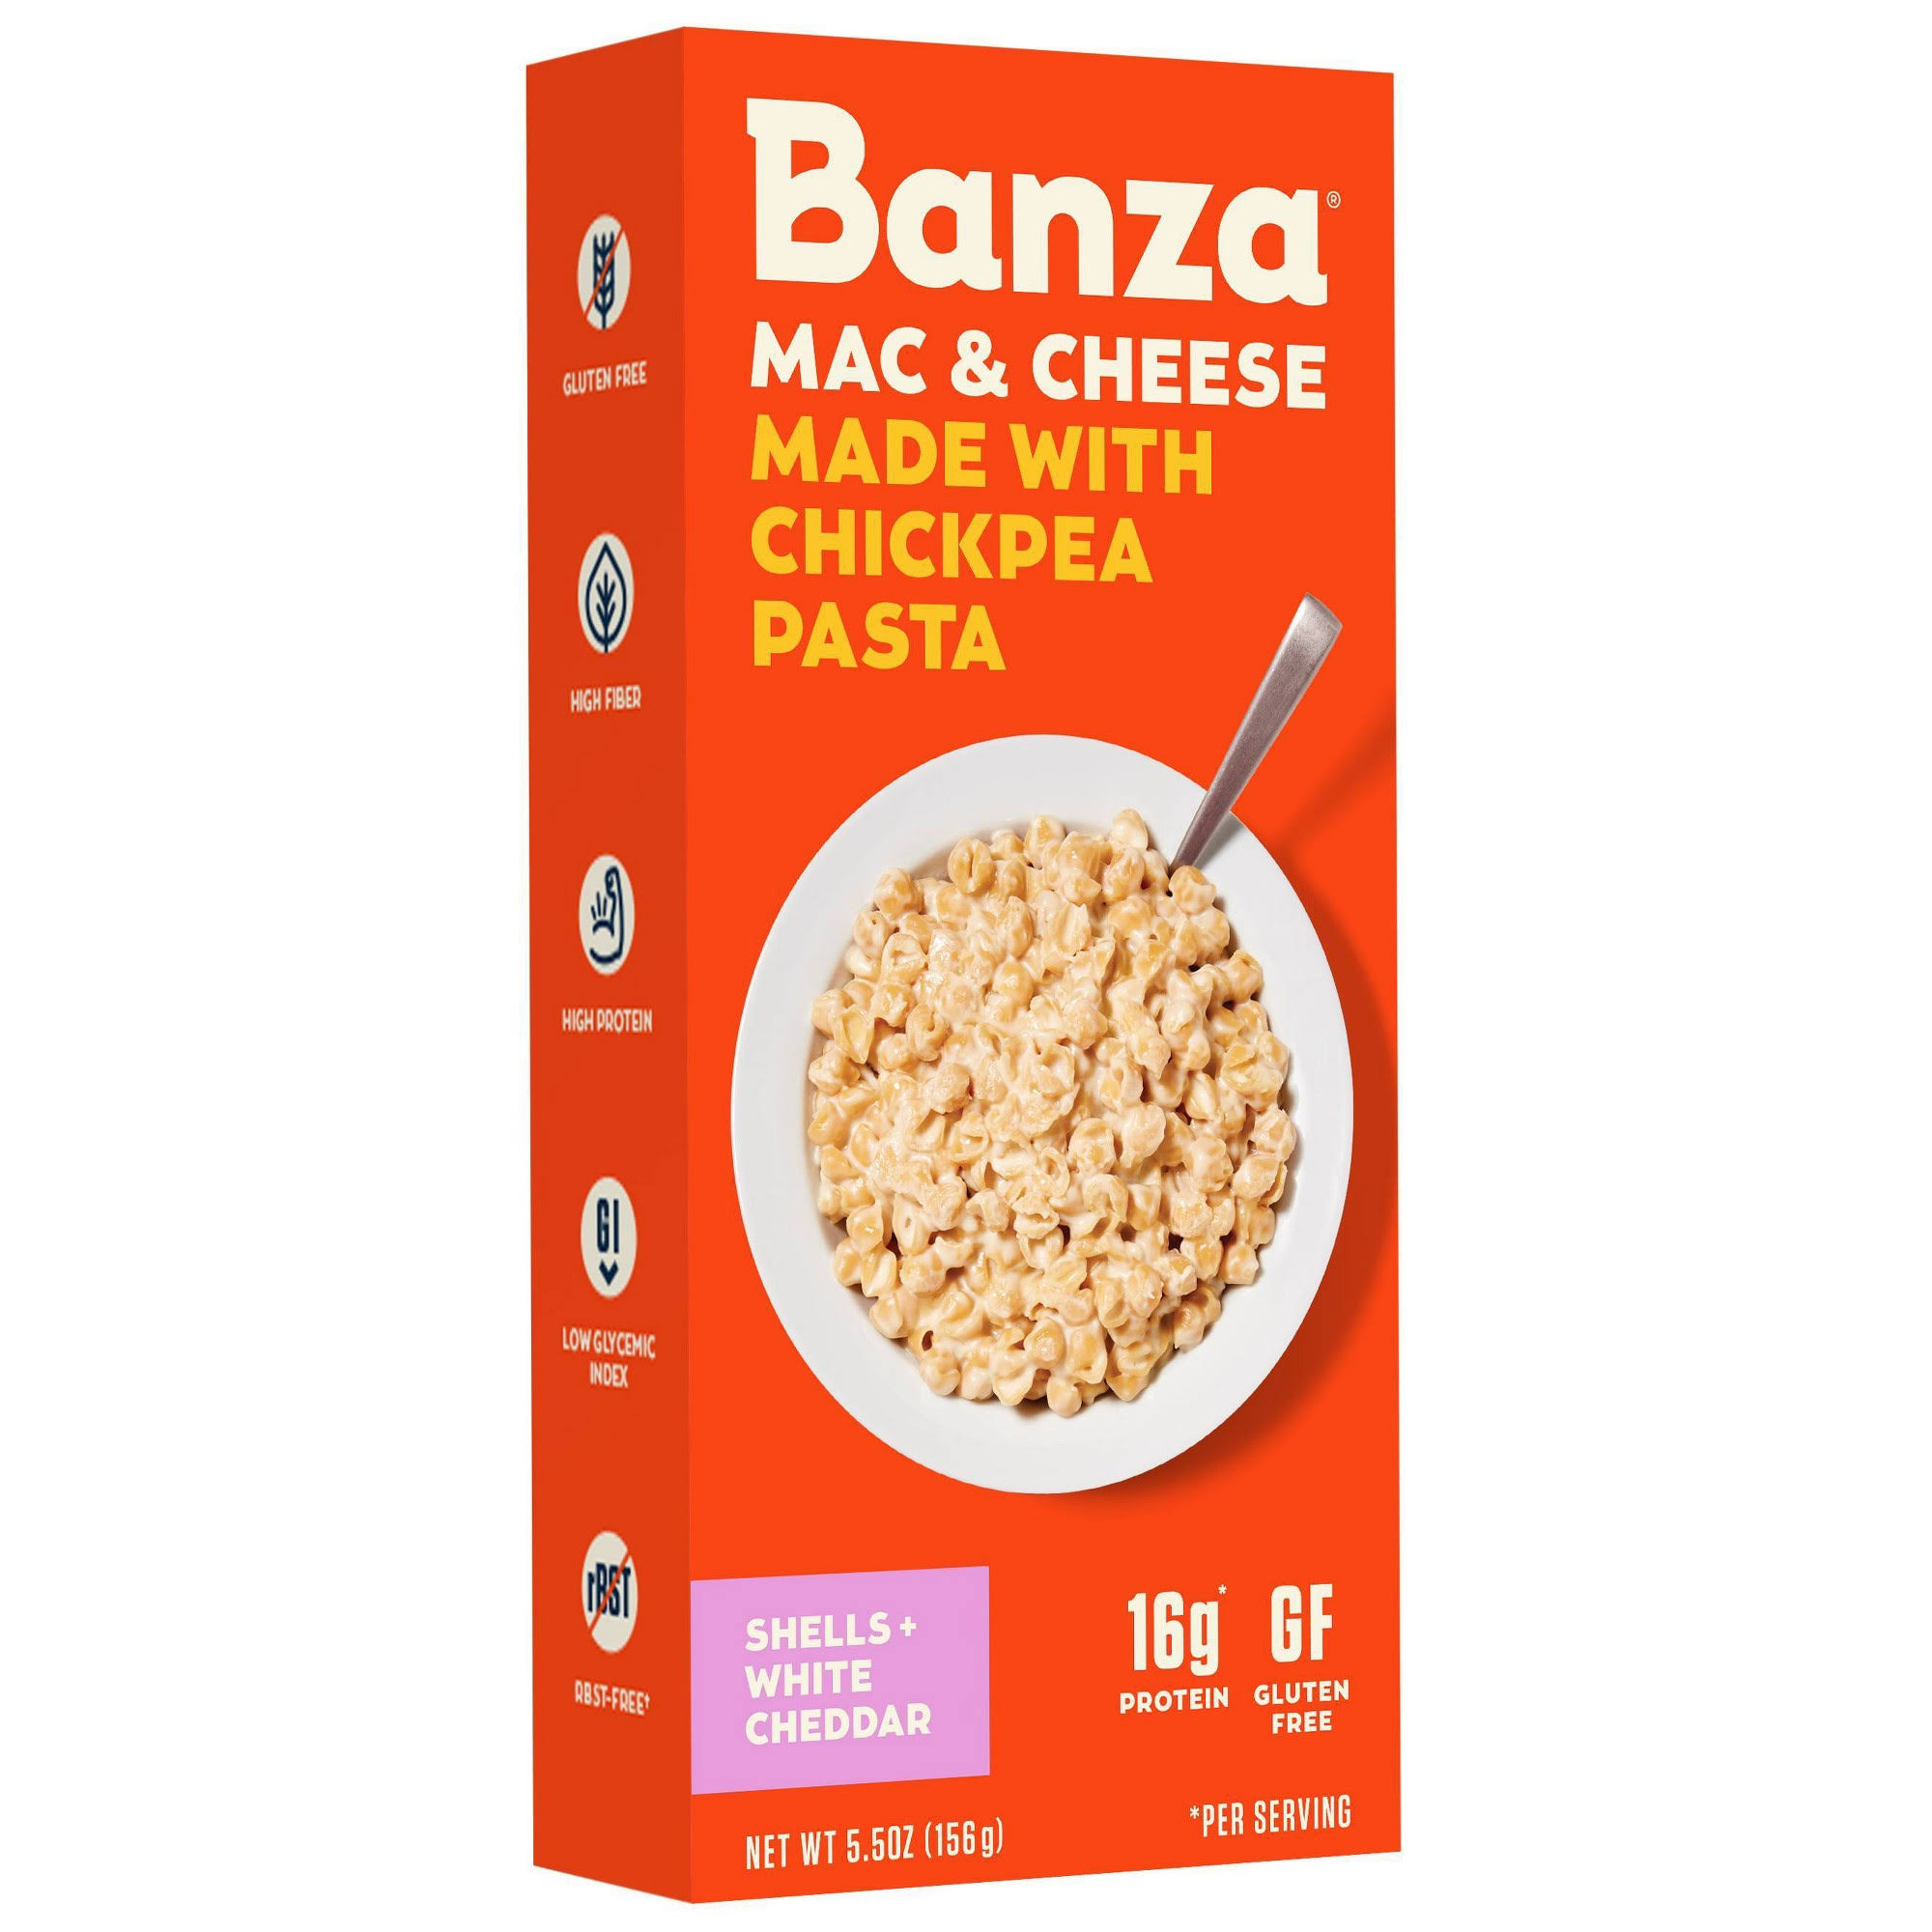 Banza Mac & Cheese Chickpea Pasta Shells White Cheddar 156G